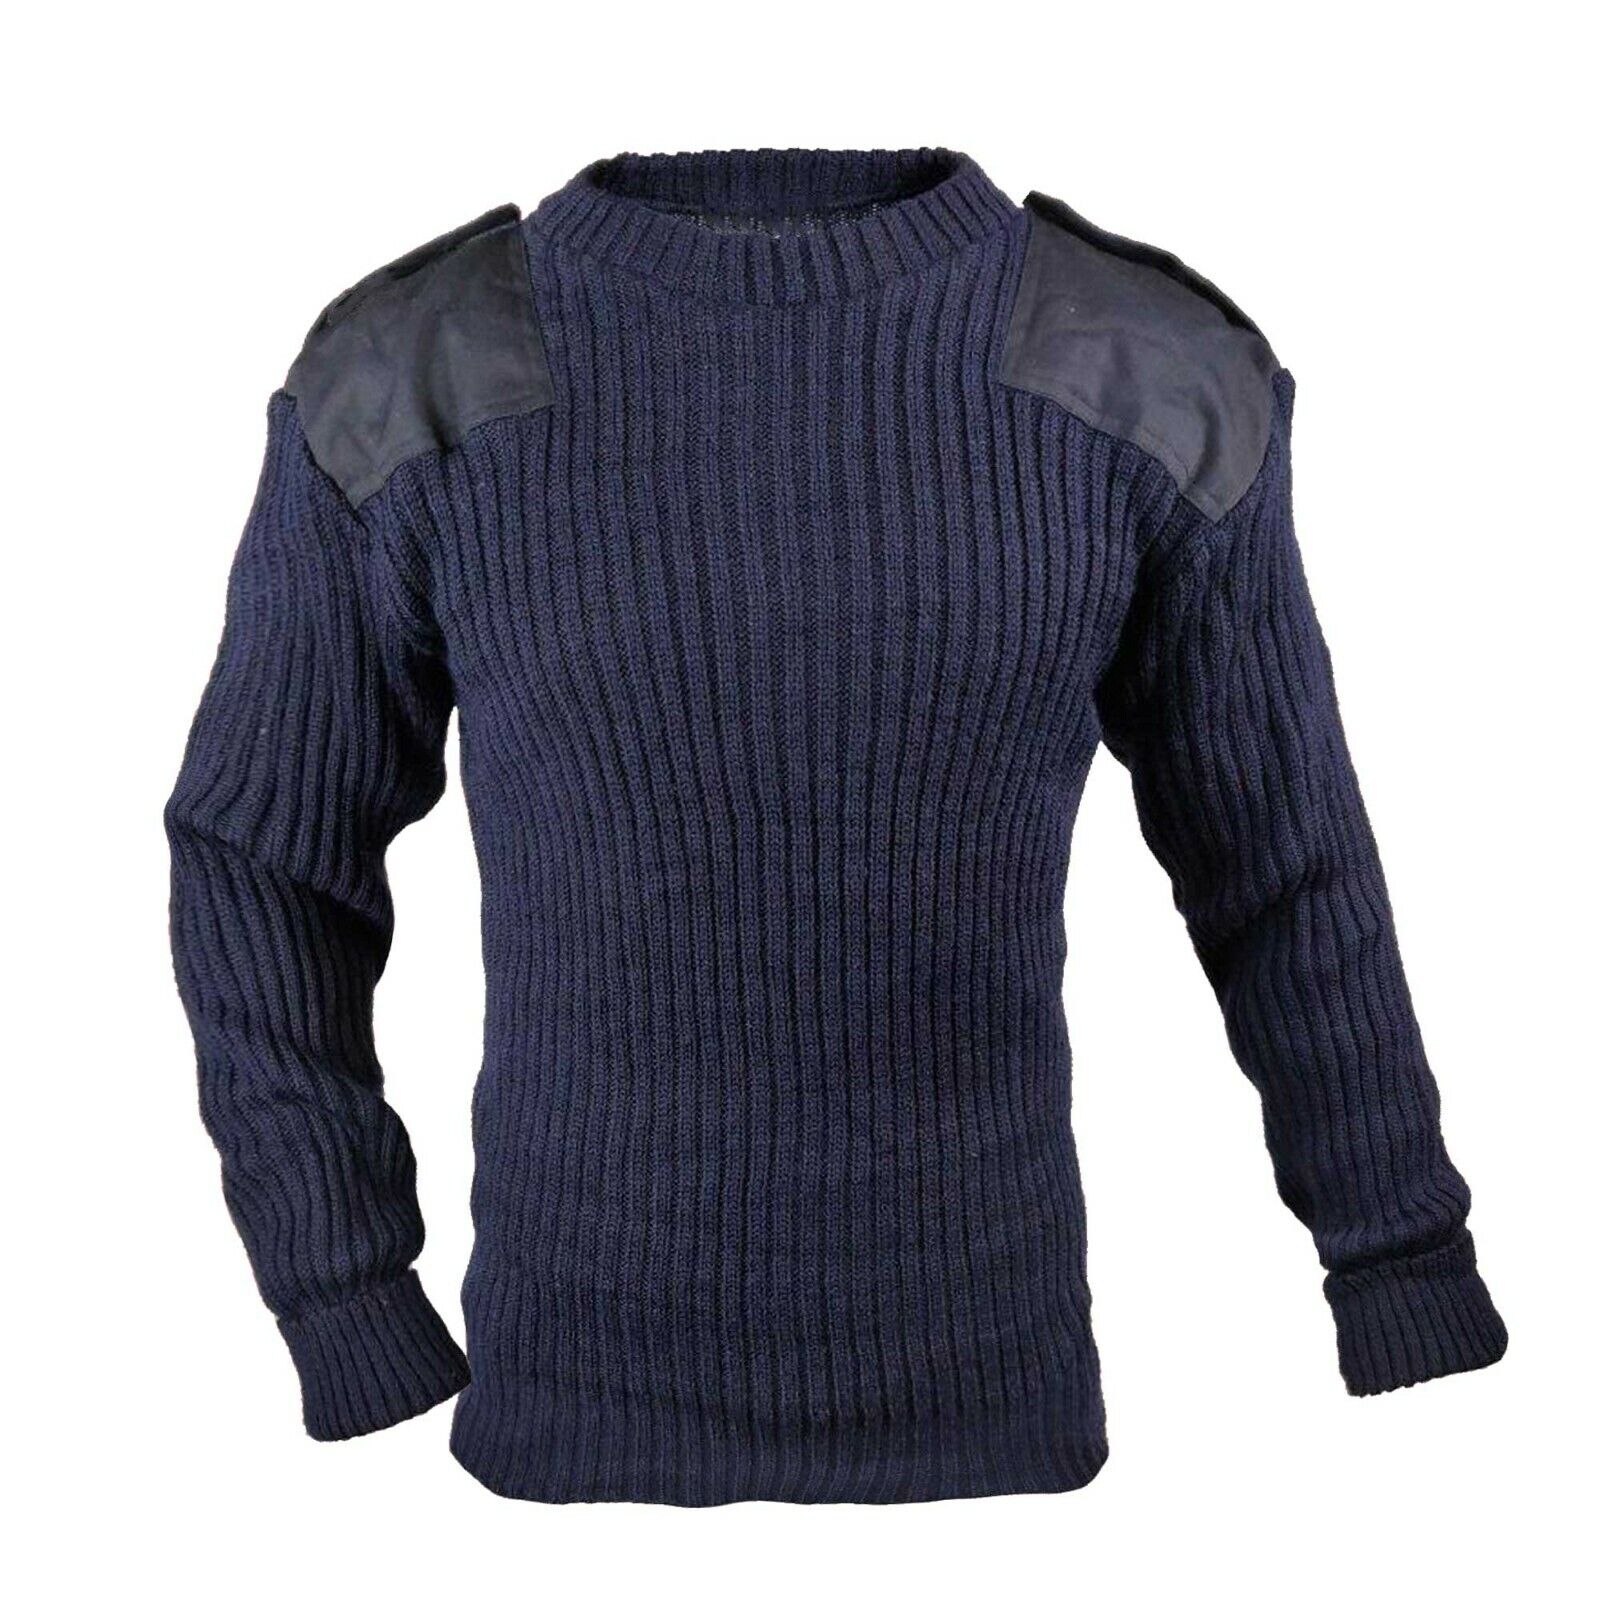 Genuine British Army Jumper Work Combat Pullover Wool Royal Navy Cadet Sweater